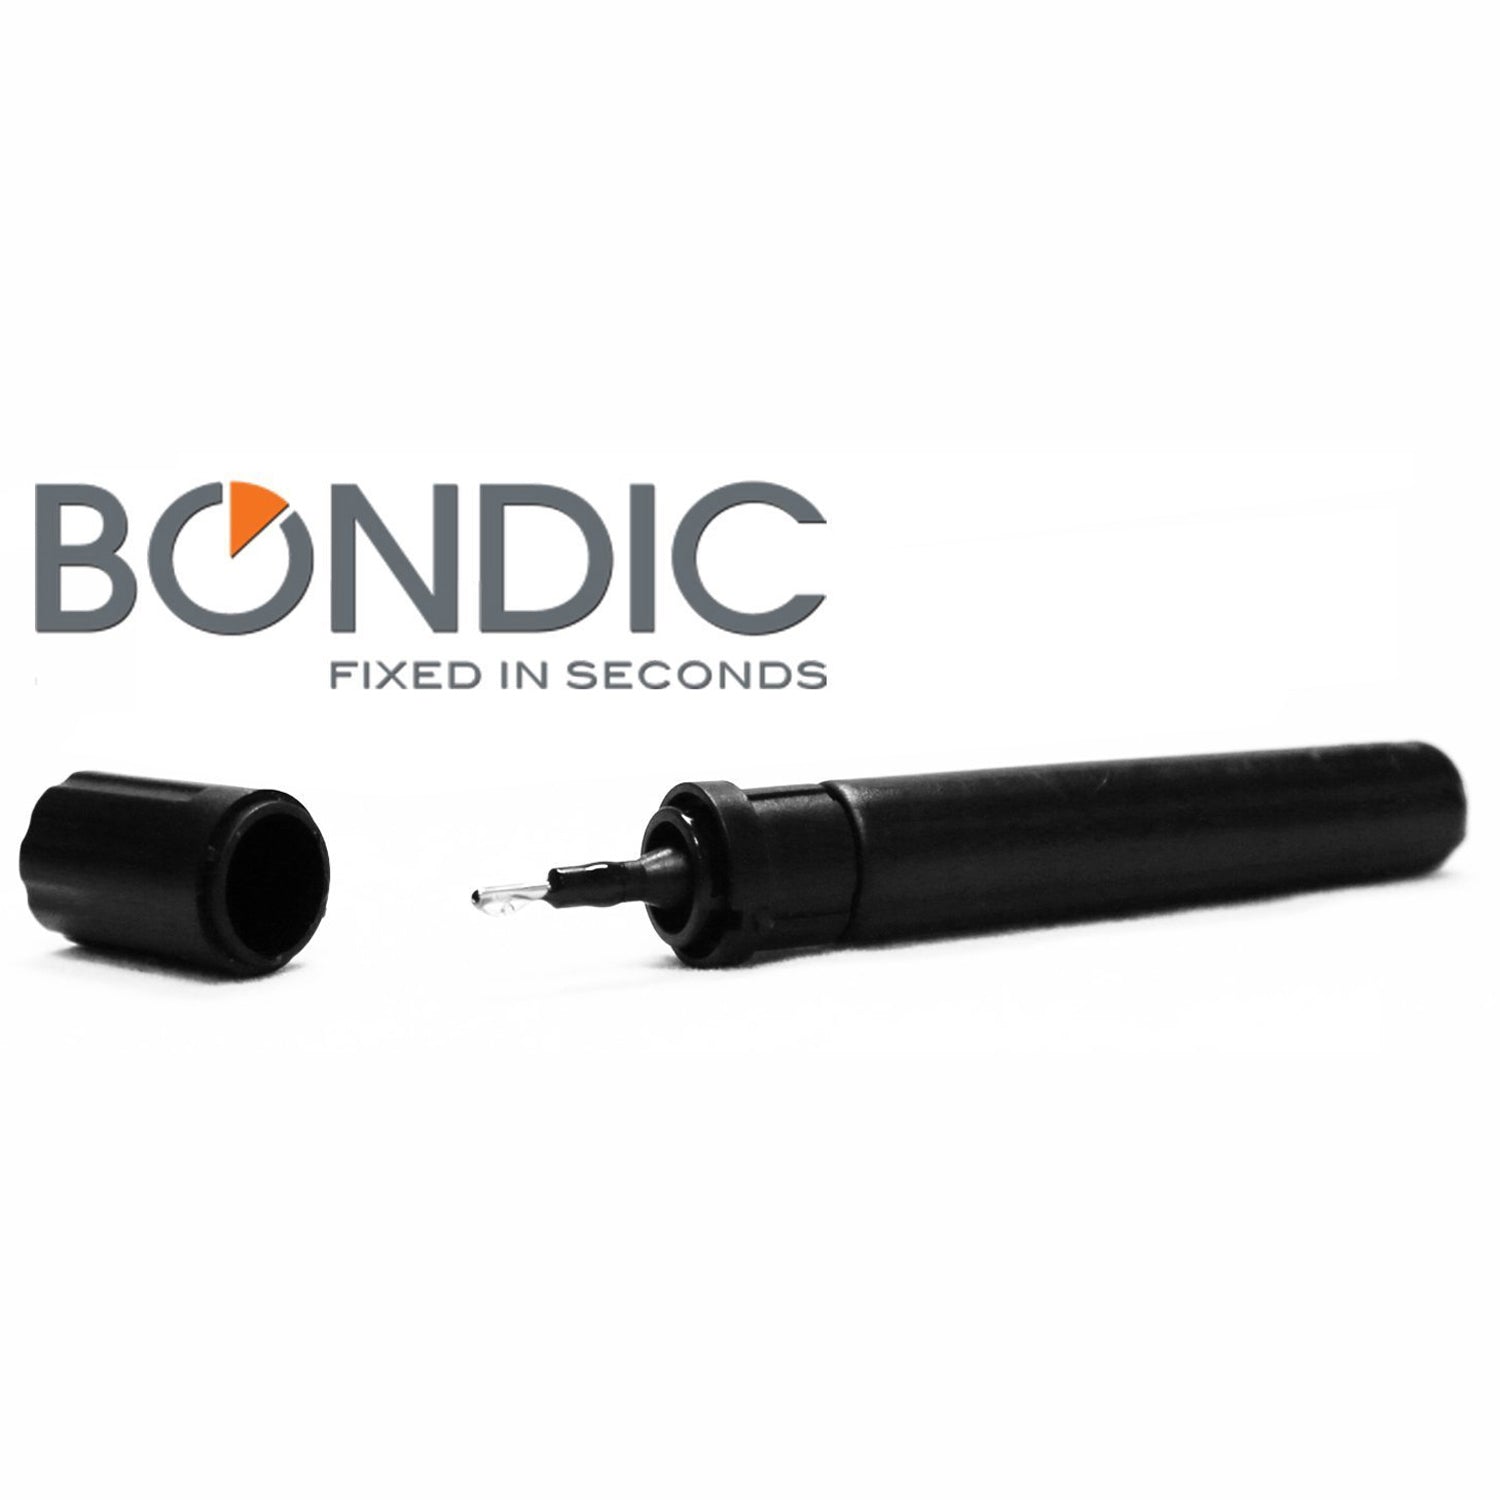 Bondic, 4 Gram Replacement Cartridge Refill For Starter Ki